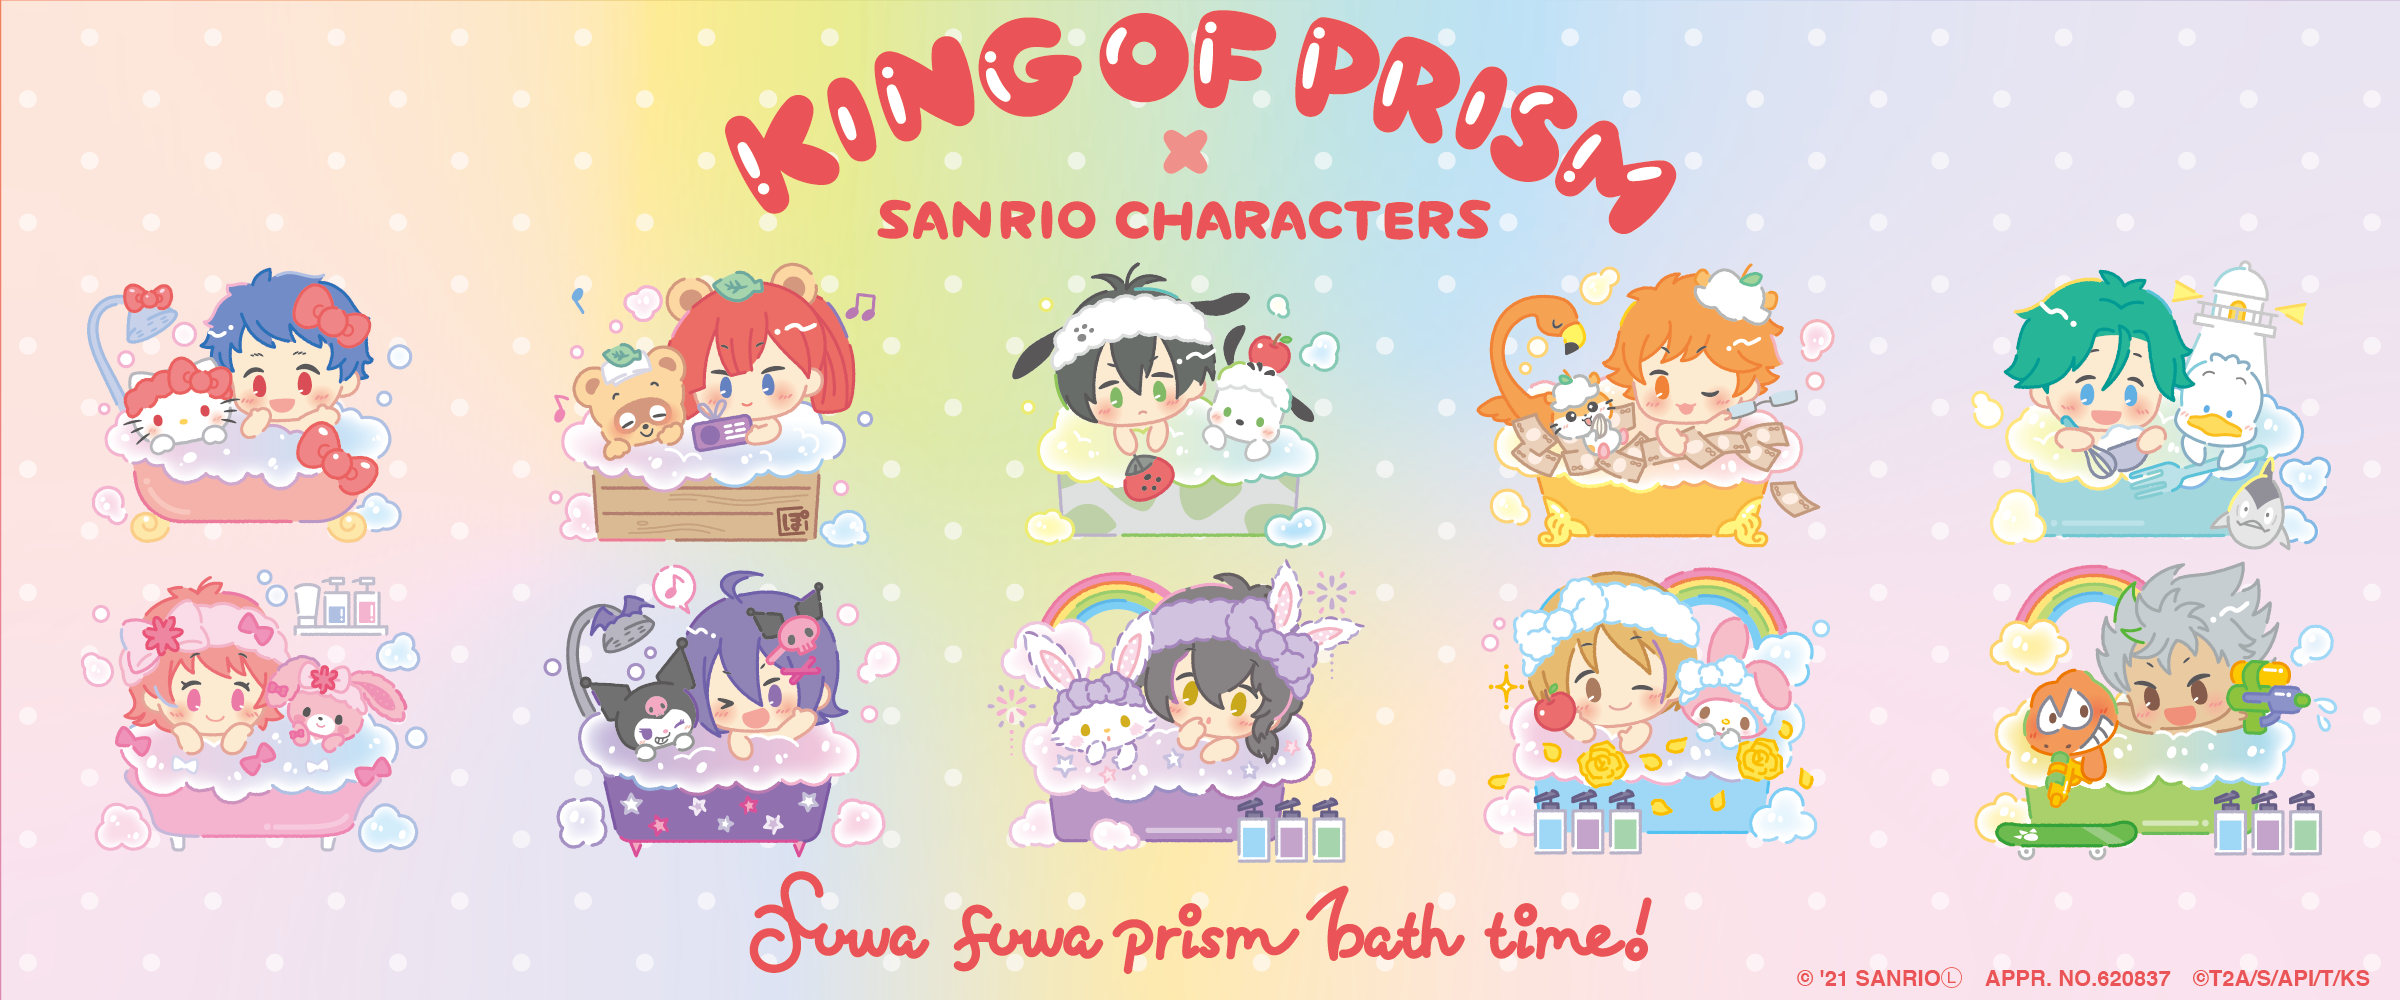 「KING OF PRISM」×「SANRIO CHARACTERS」第3弾が登場！サブスク型グッズ販売サービス『サプライズボックス』にて期間限定で販売開始のサブ画像1